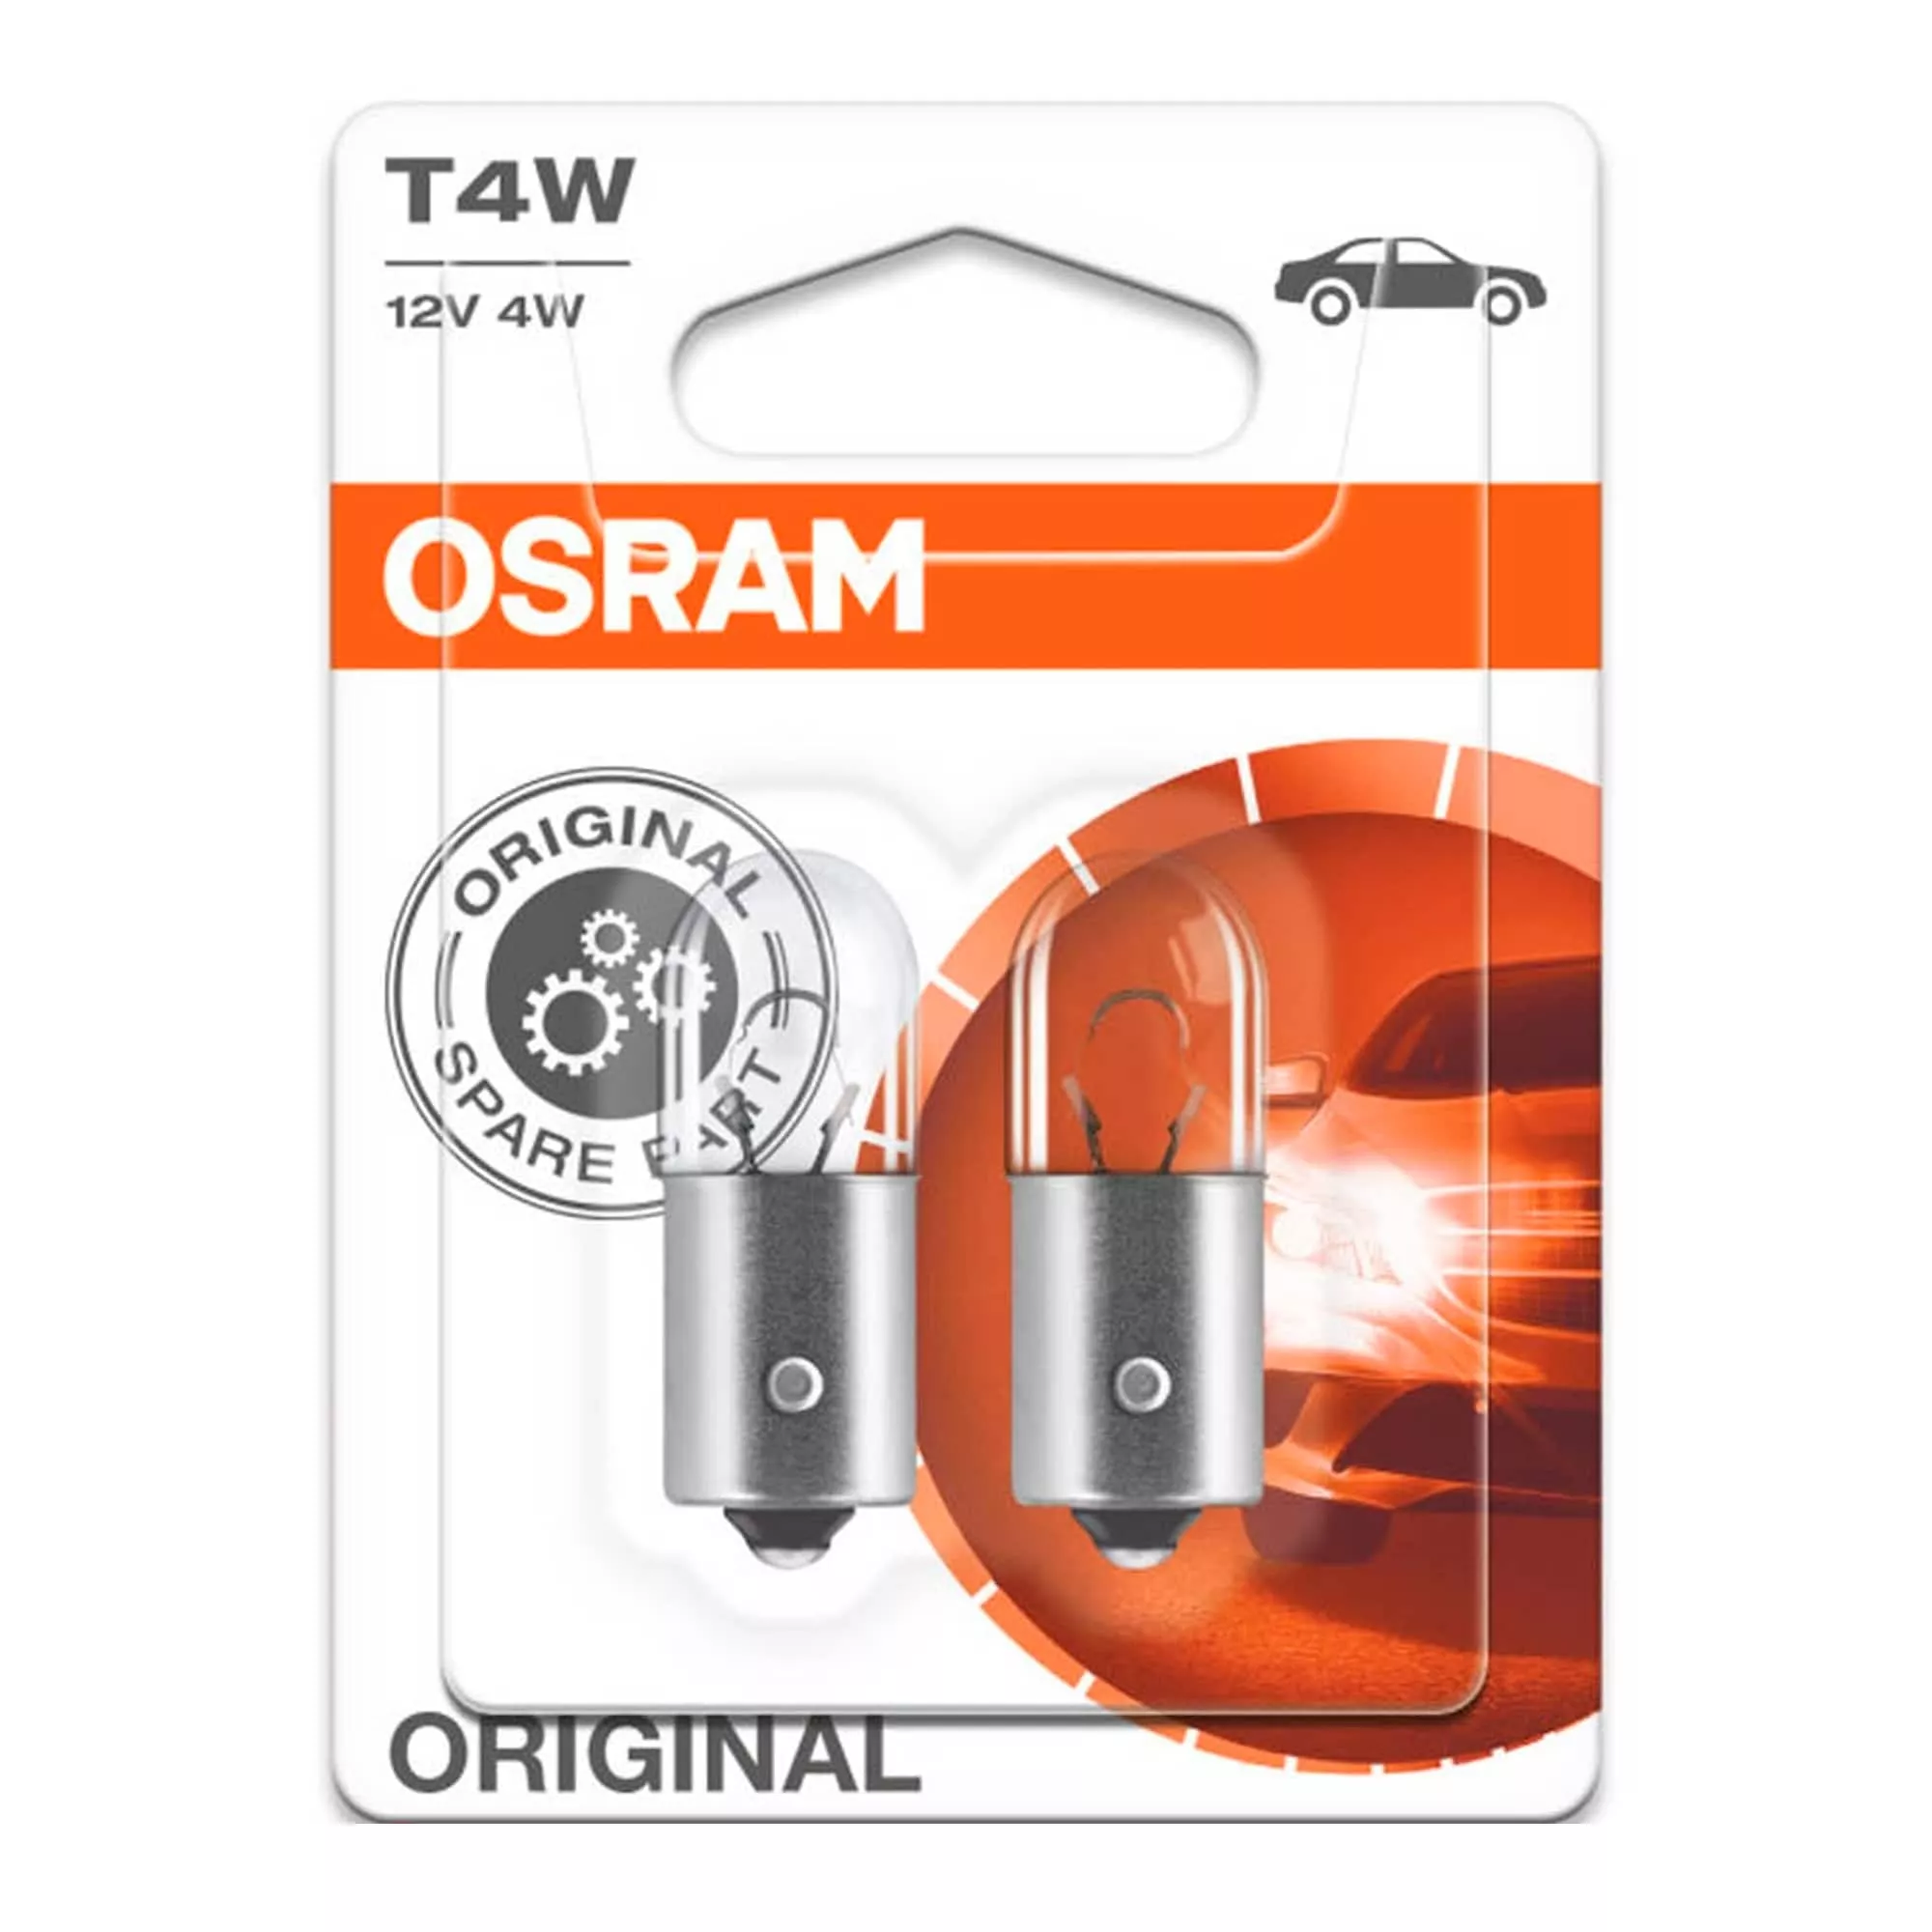 Лампа Osram Original T4W 12V 4W 3893-02B